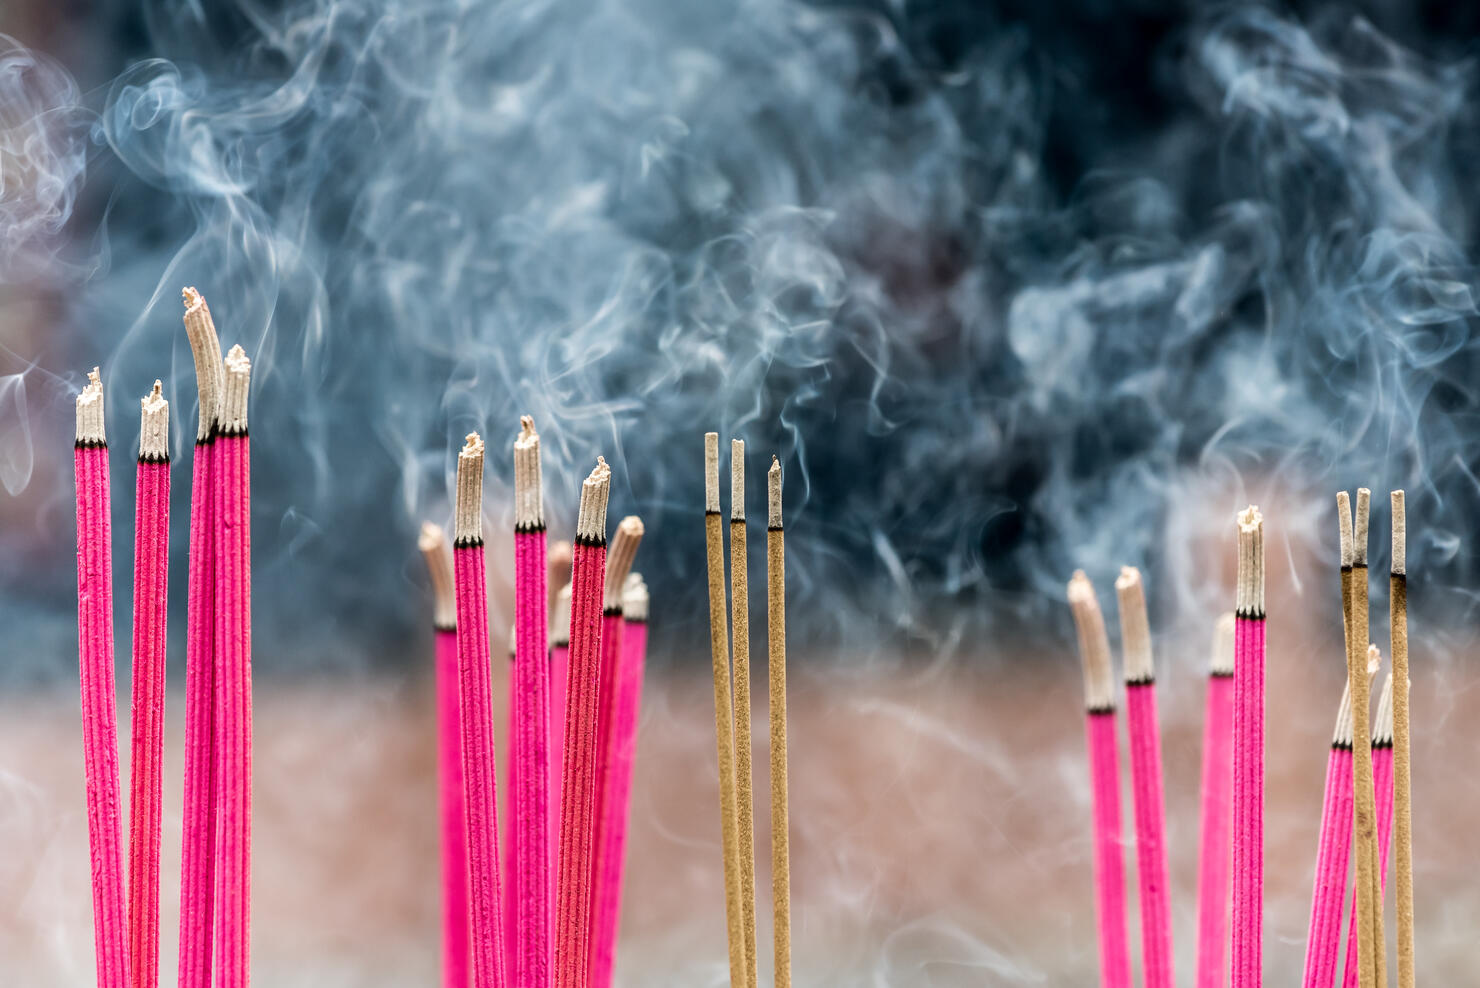 Four dozen natural-scented incense sticks